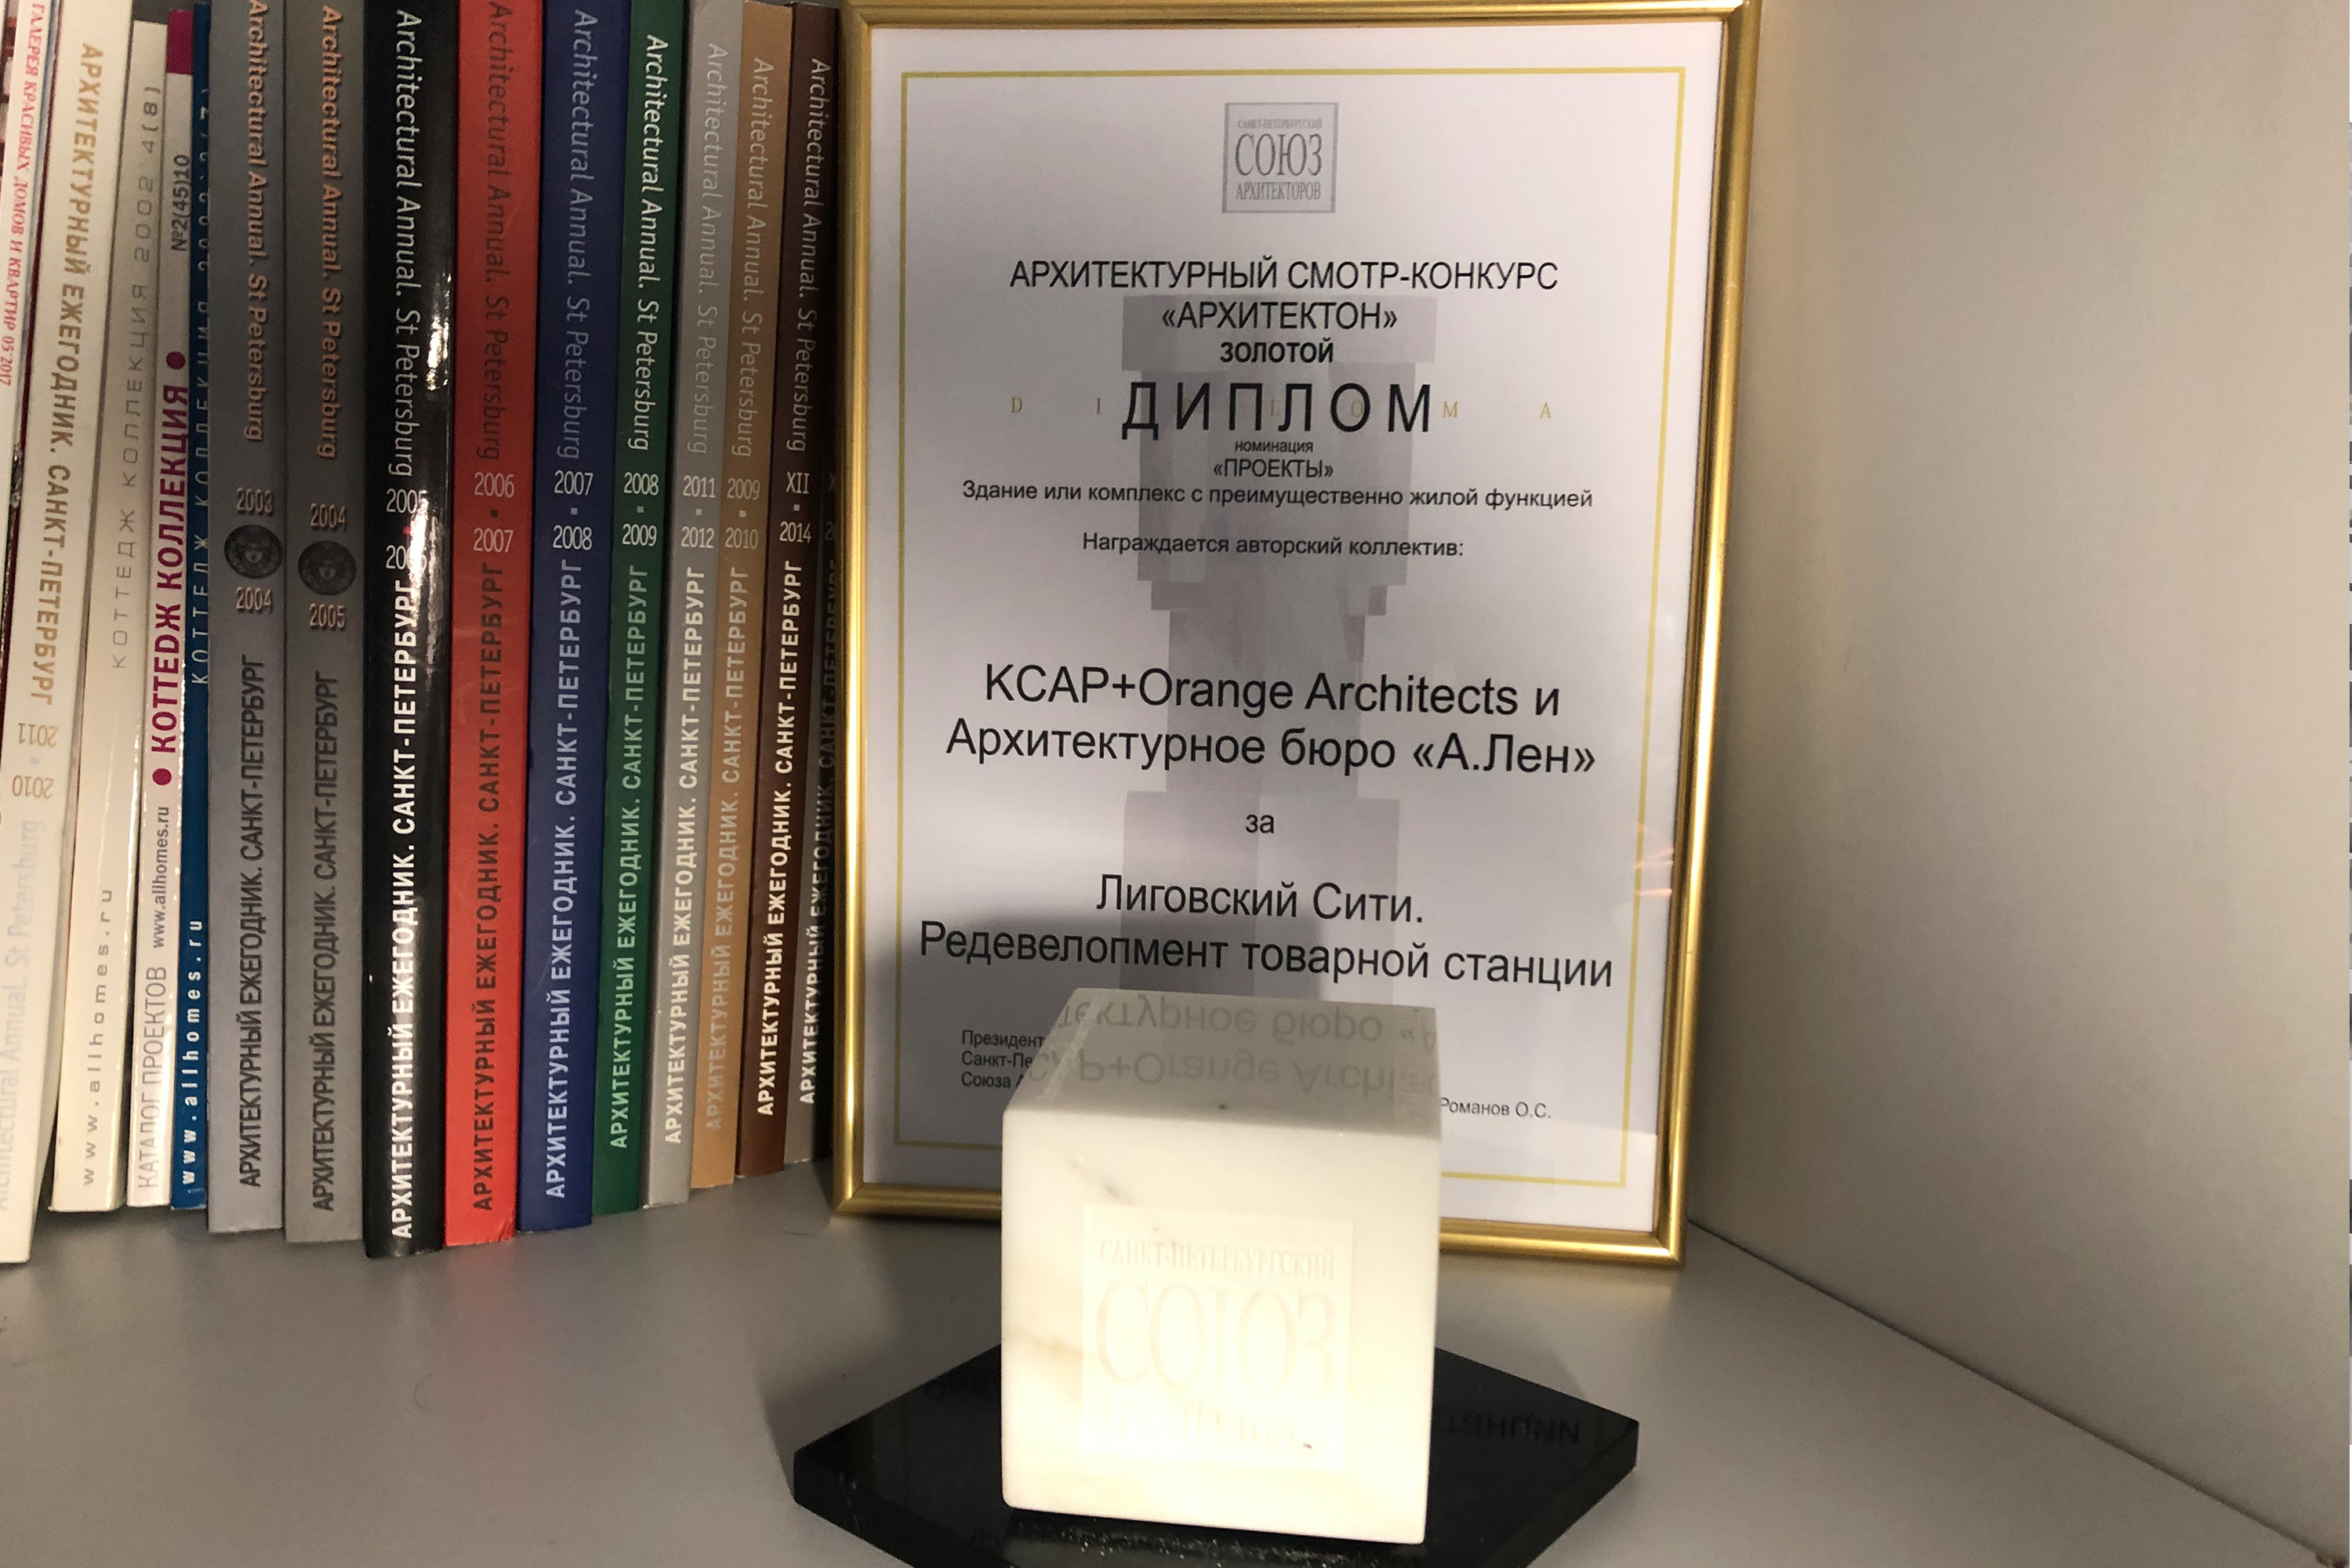 Ligovsky City St. Petersburg receives Architecton Award  09 October 2020